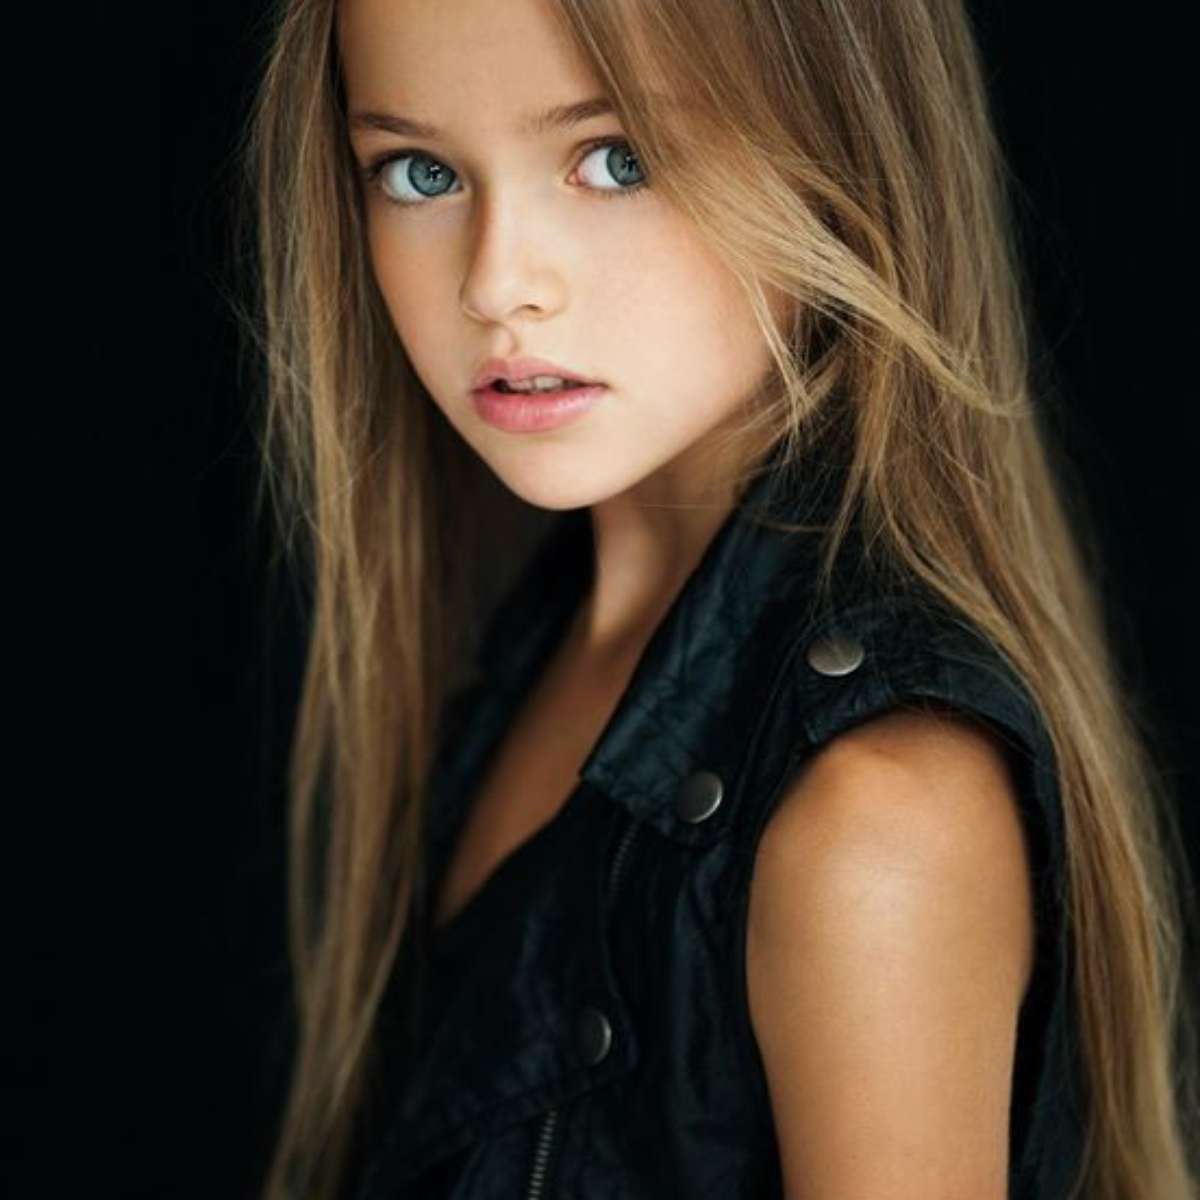 Modelo de 10 anos é a menina mais bonita do mundo